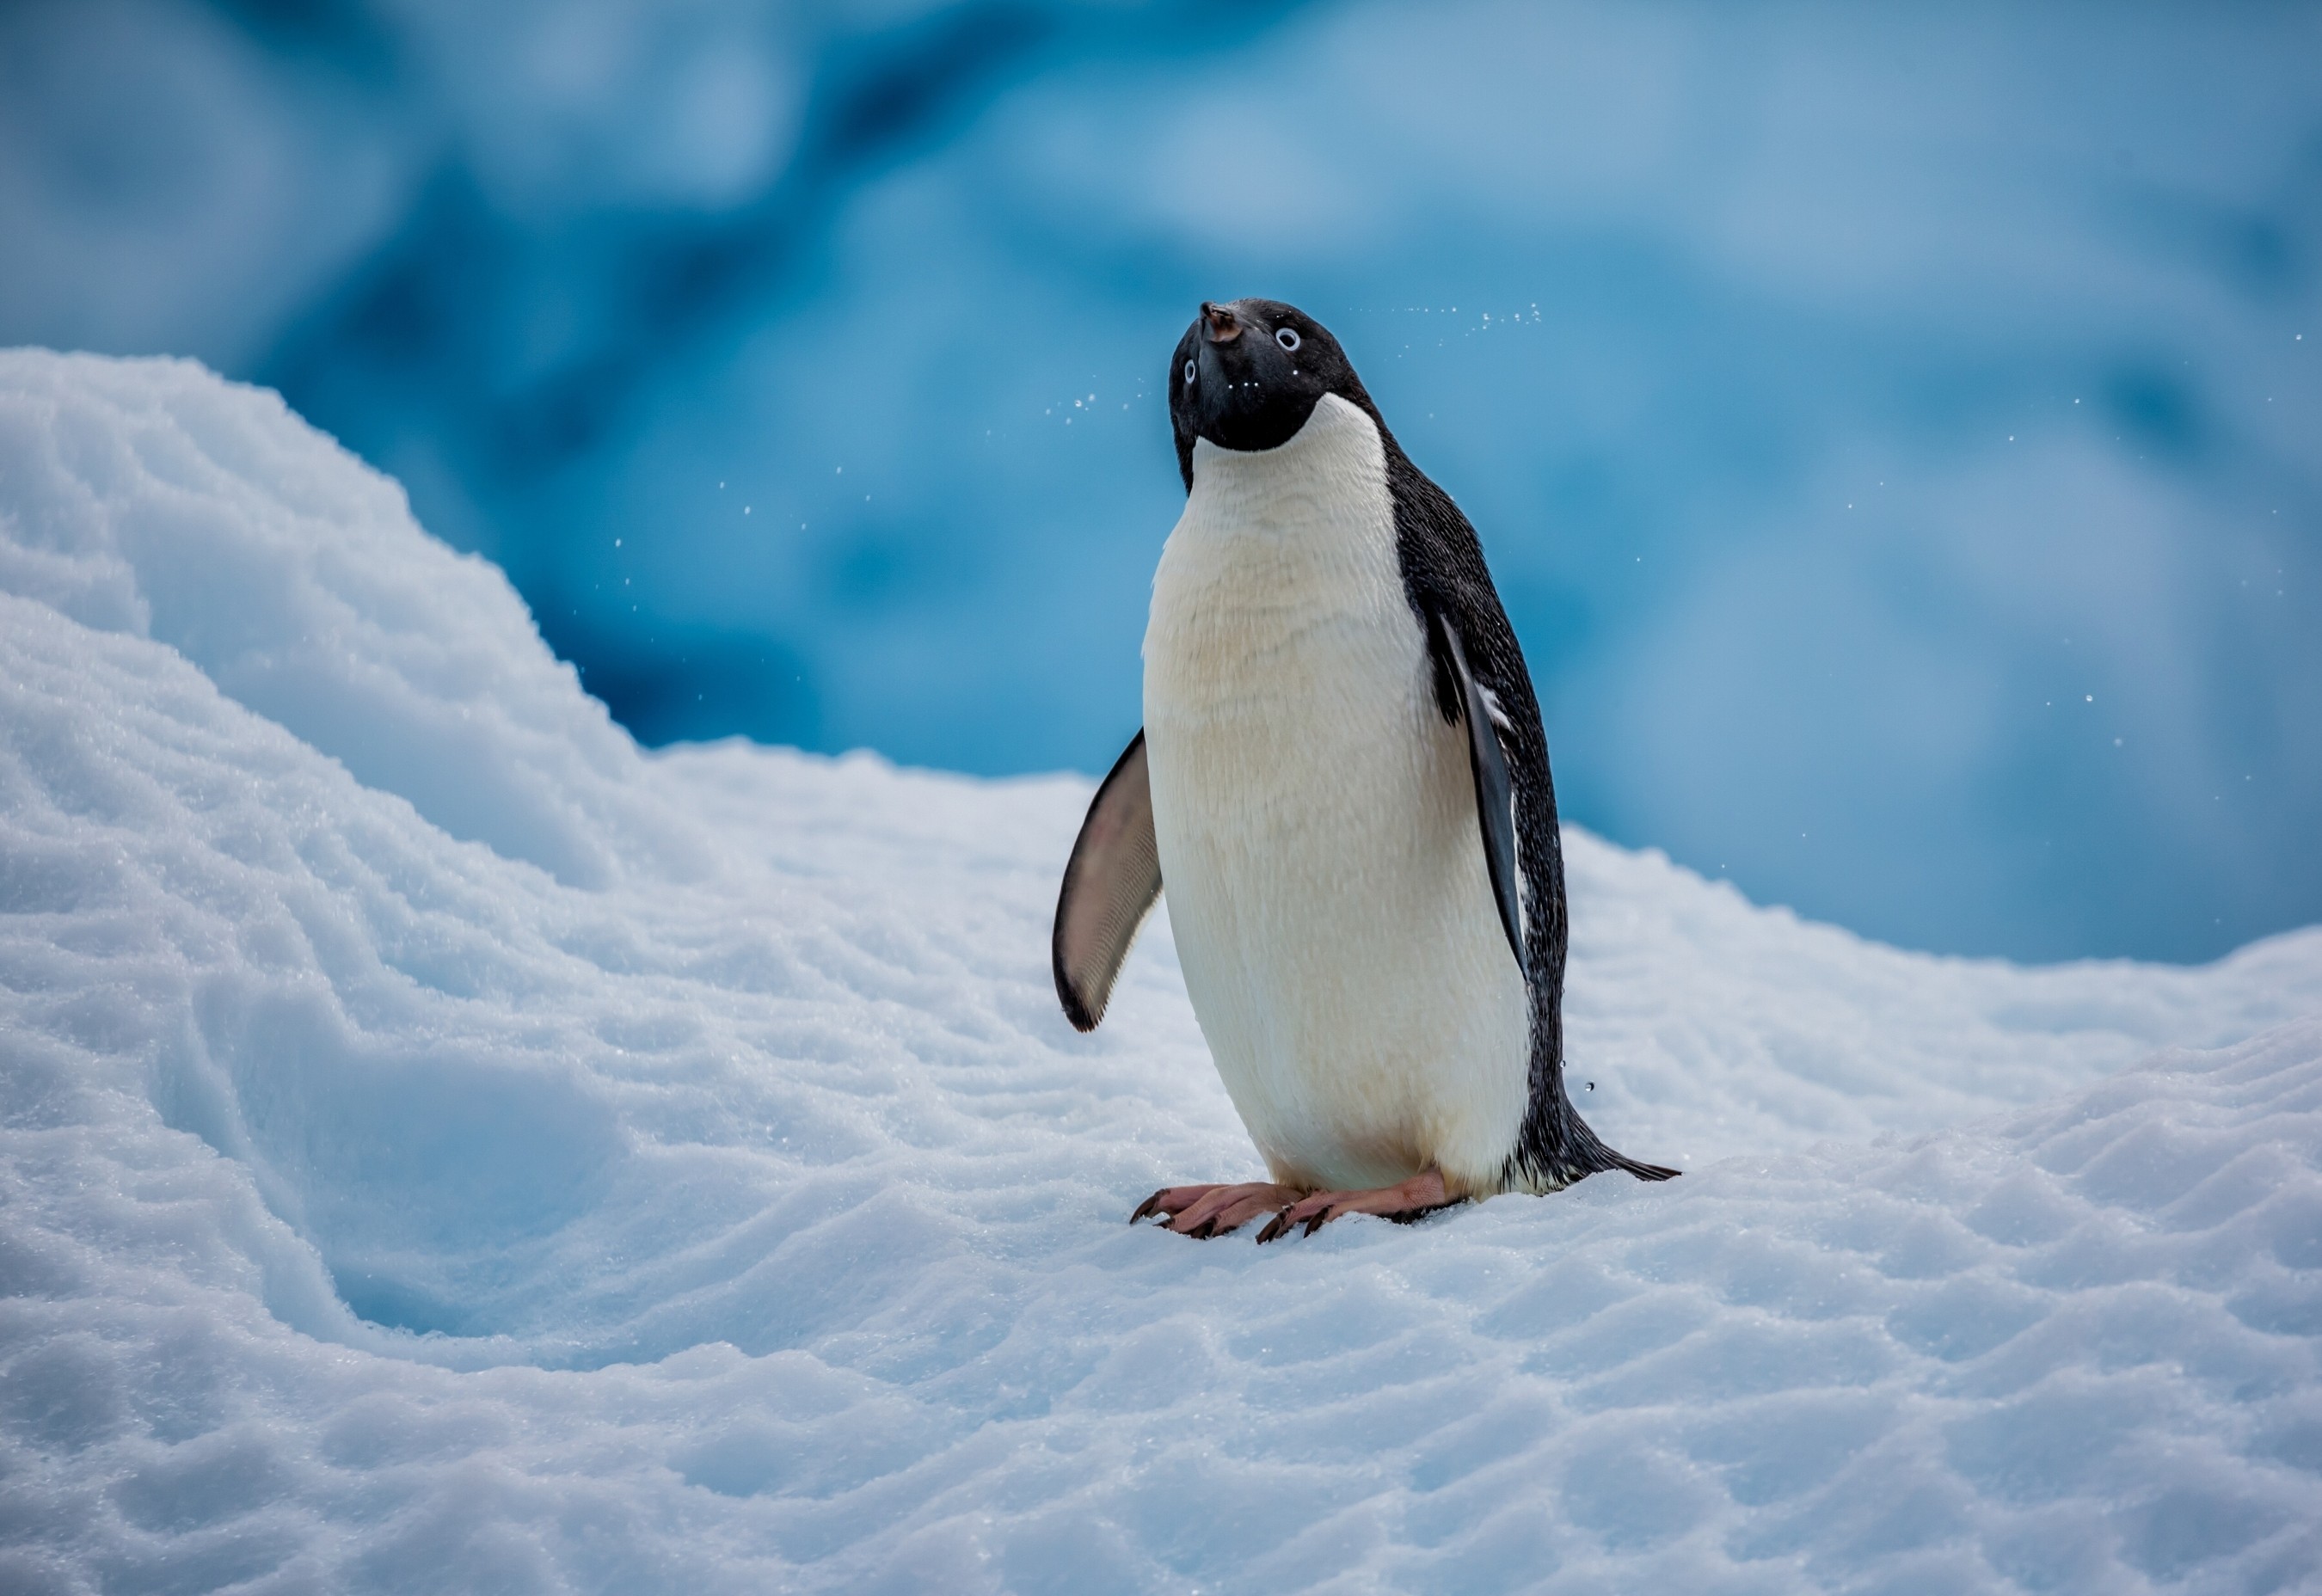 General 2700x1856 nature ice snow animals birds cyan penguins